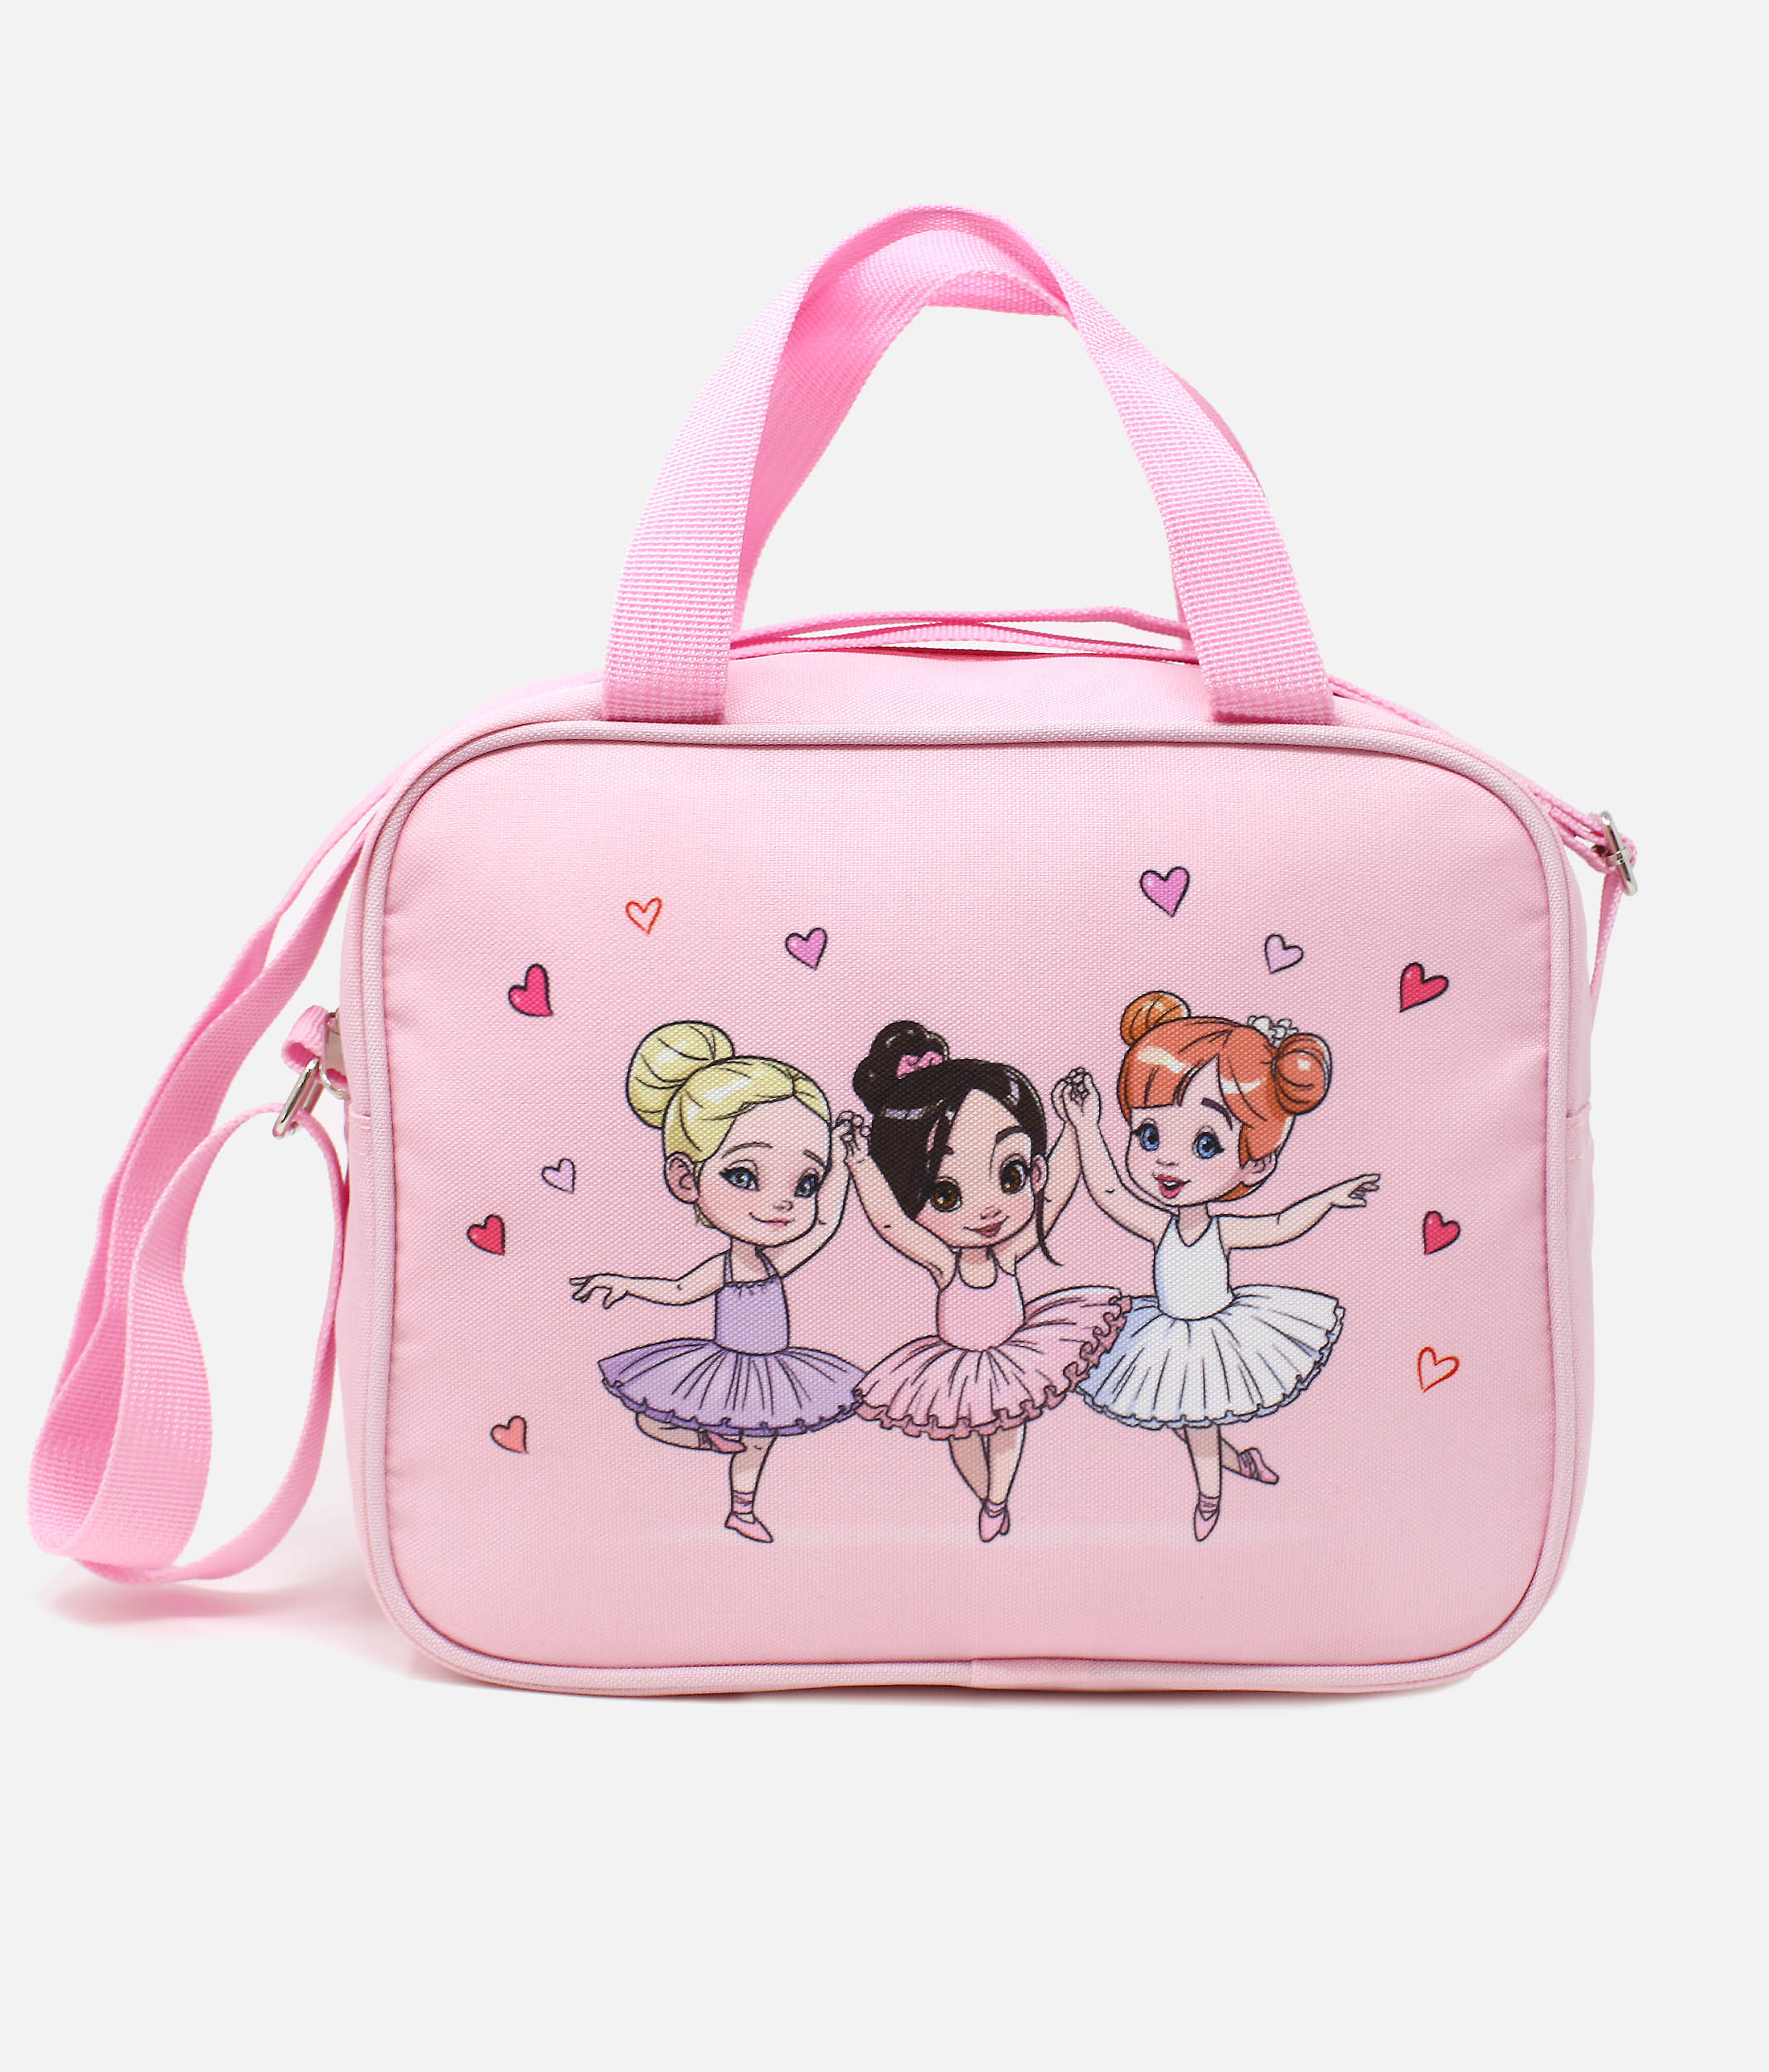 Capezio Embroidered Barrel Bag Childs Dance Ballet Bag Pink B284